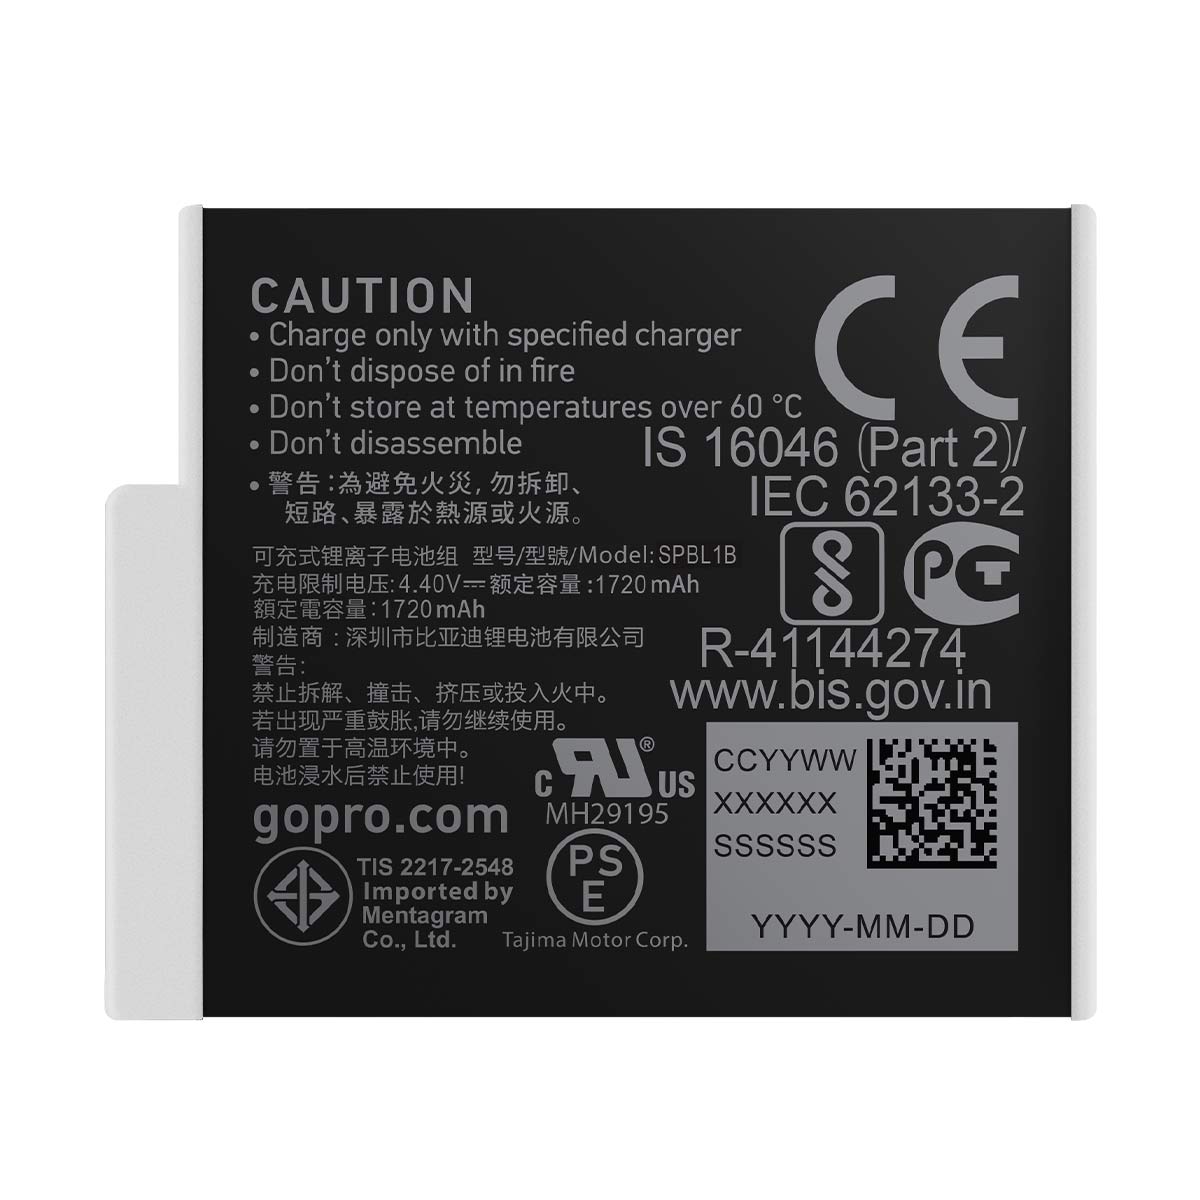 GoPro Enduro Rechargeable Battery (HERO12/11/10/9 Black)